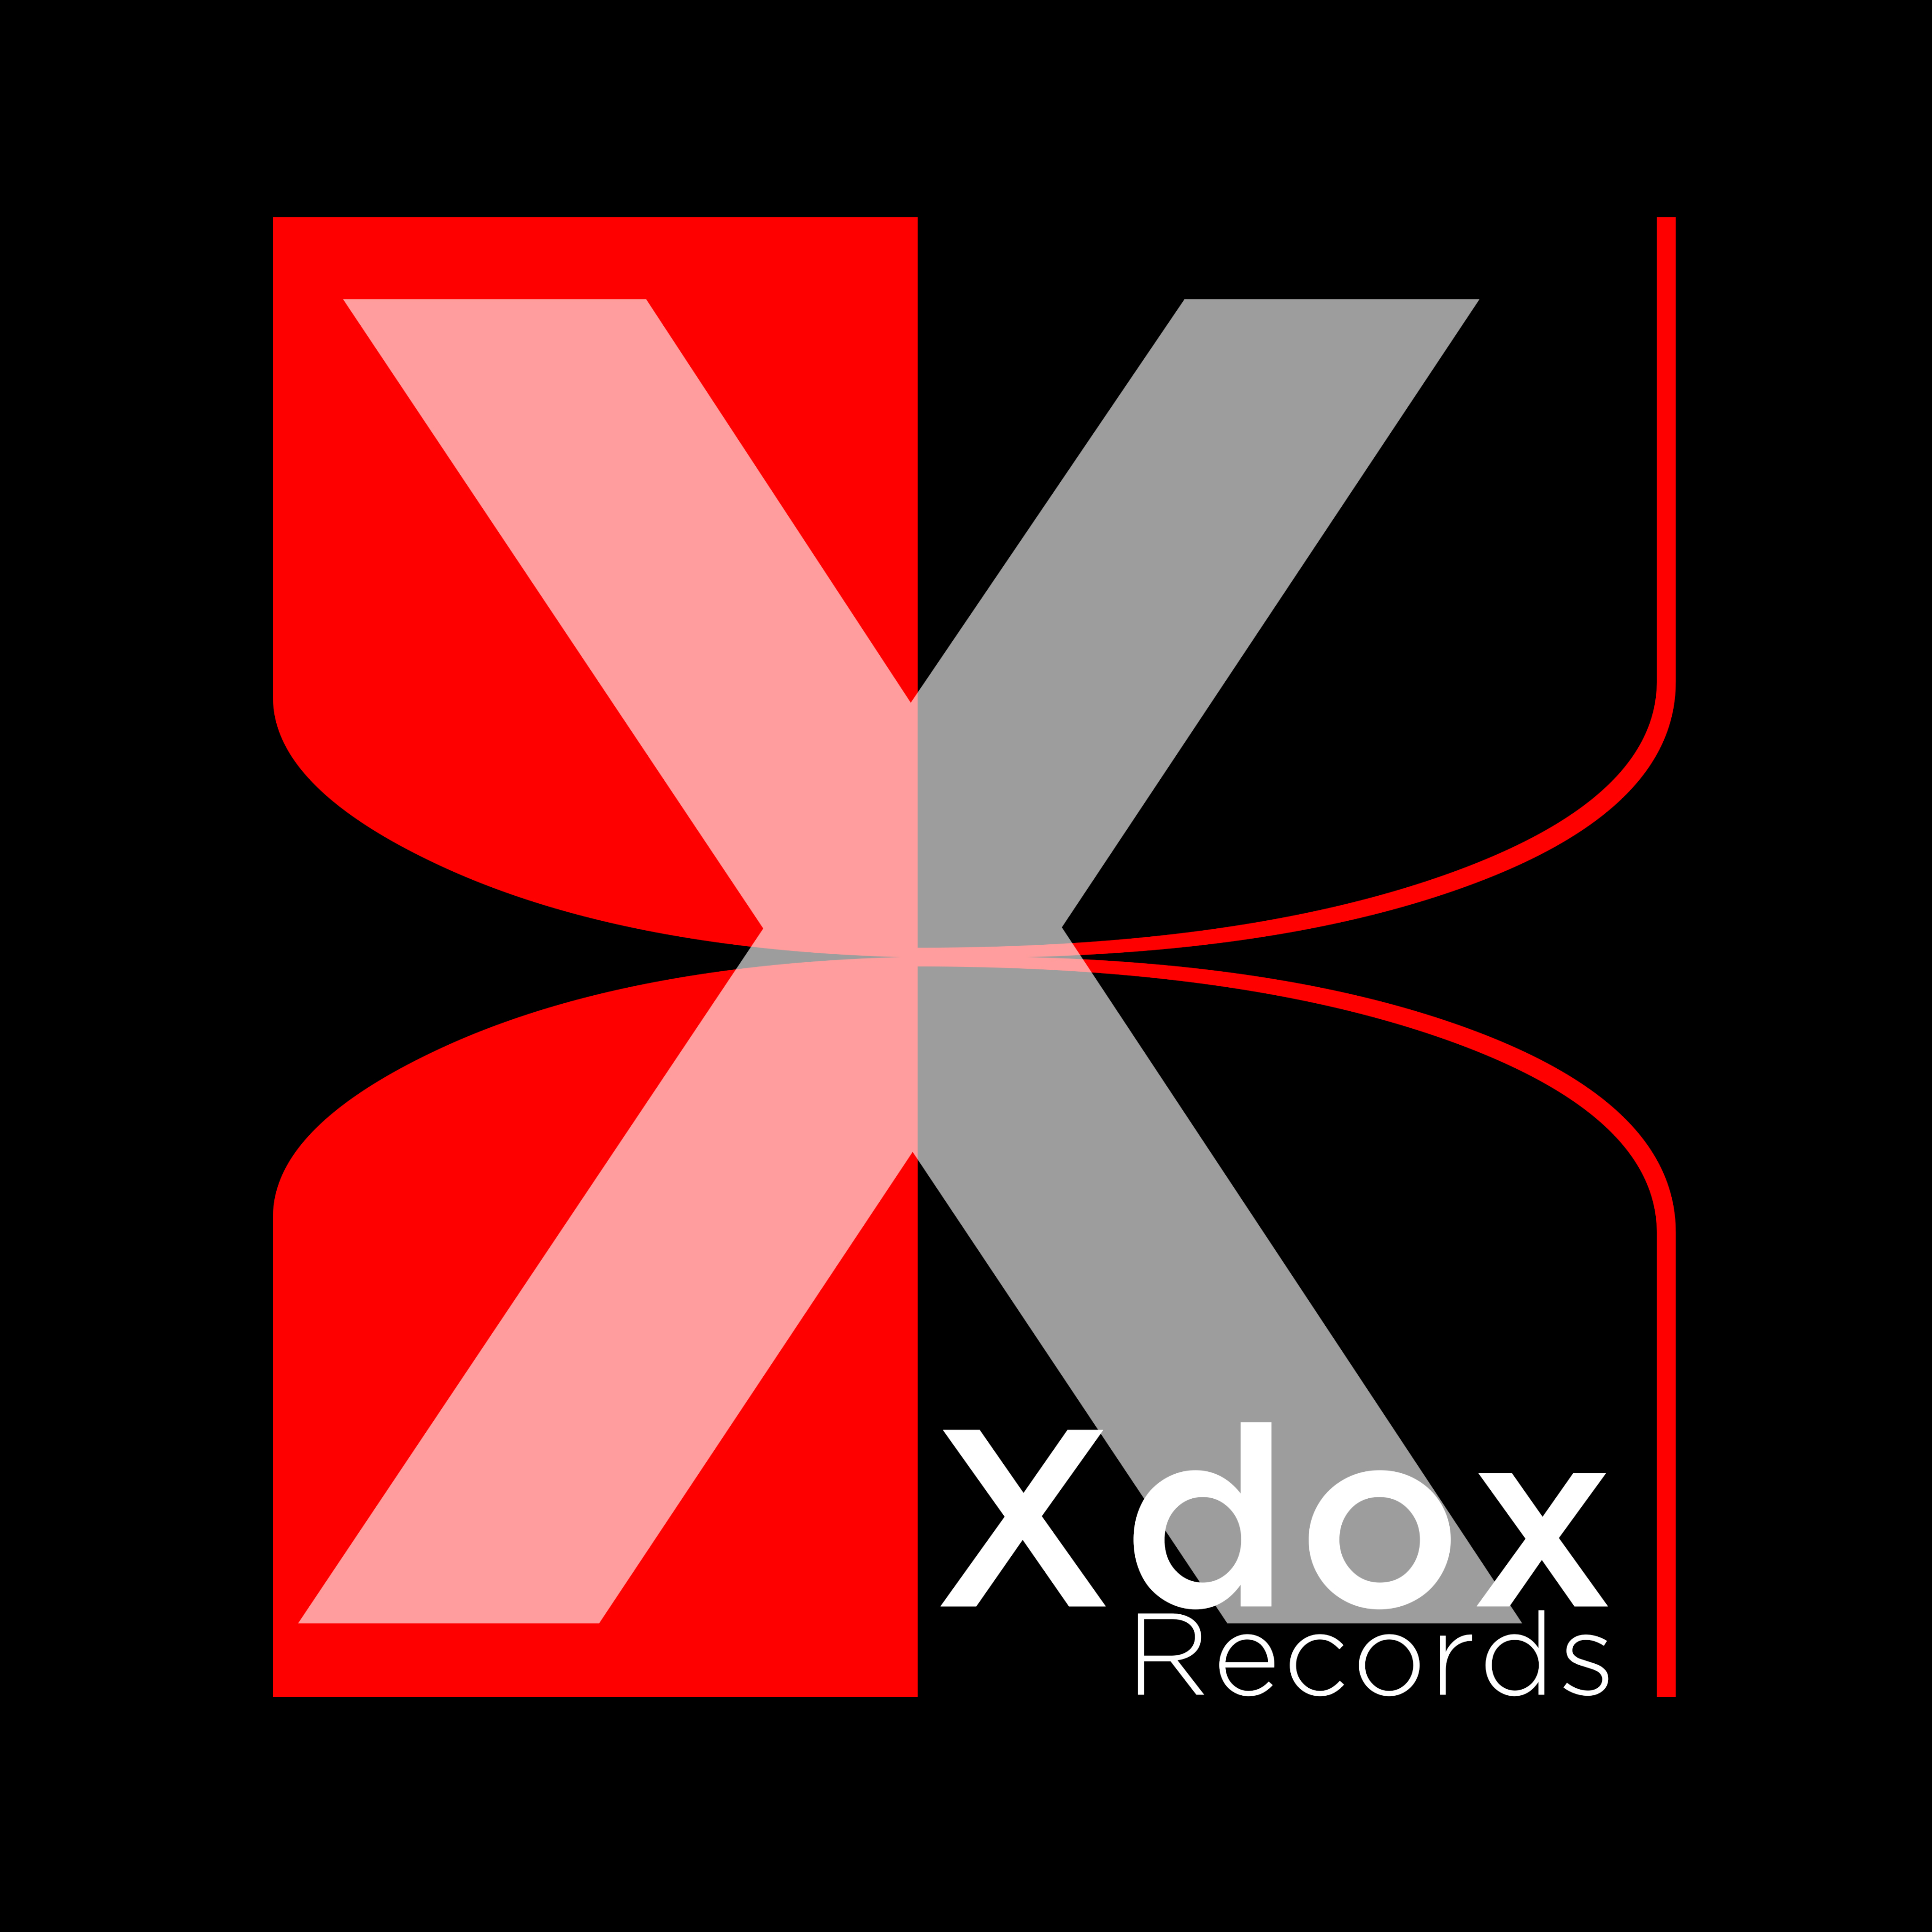 Xdox Records